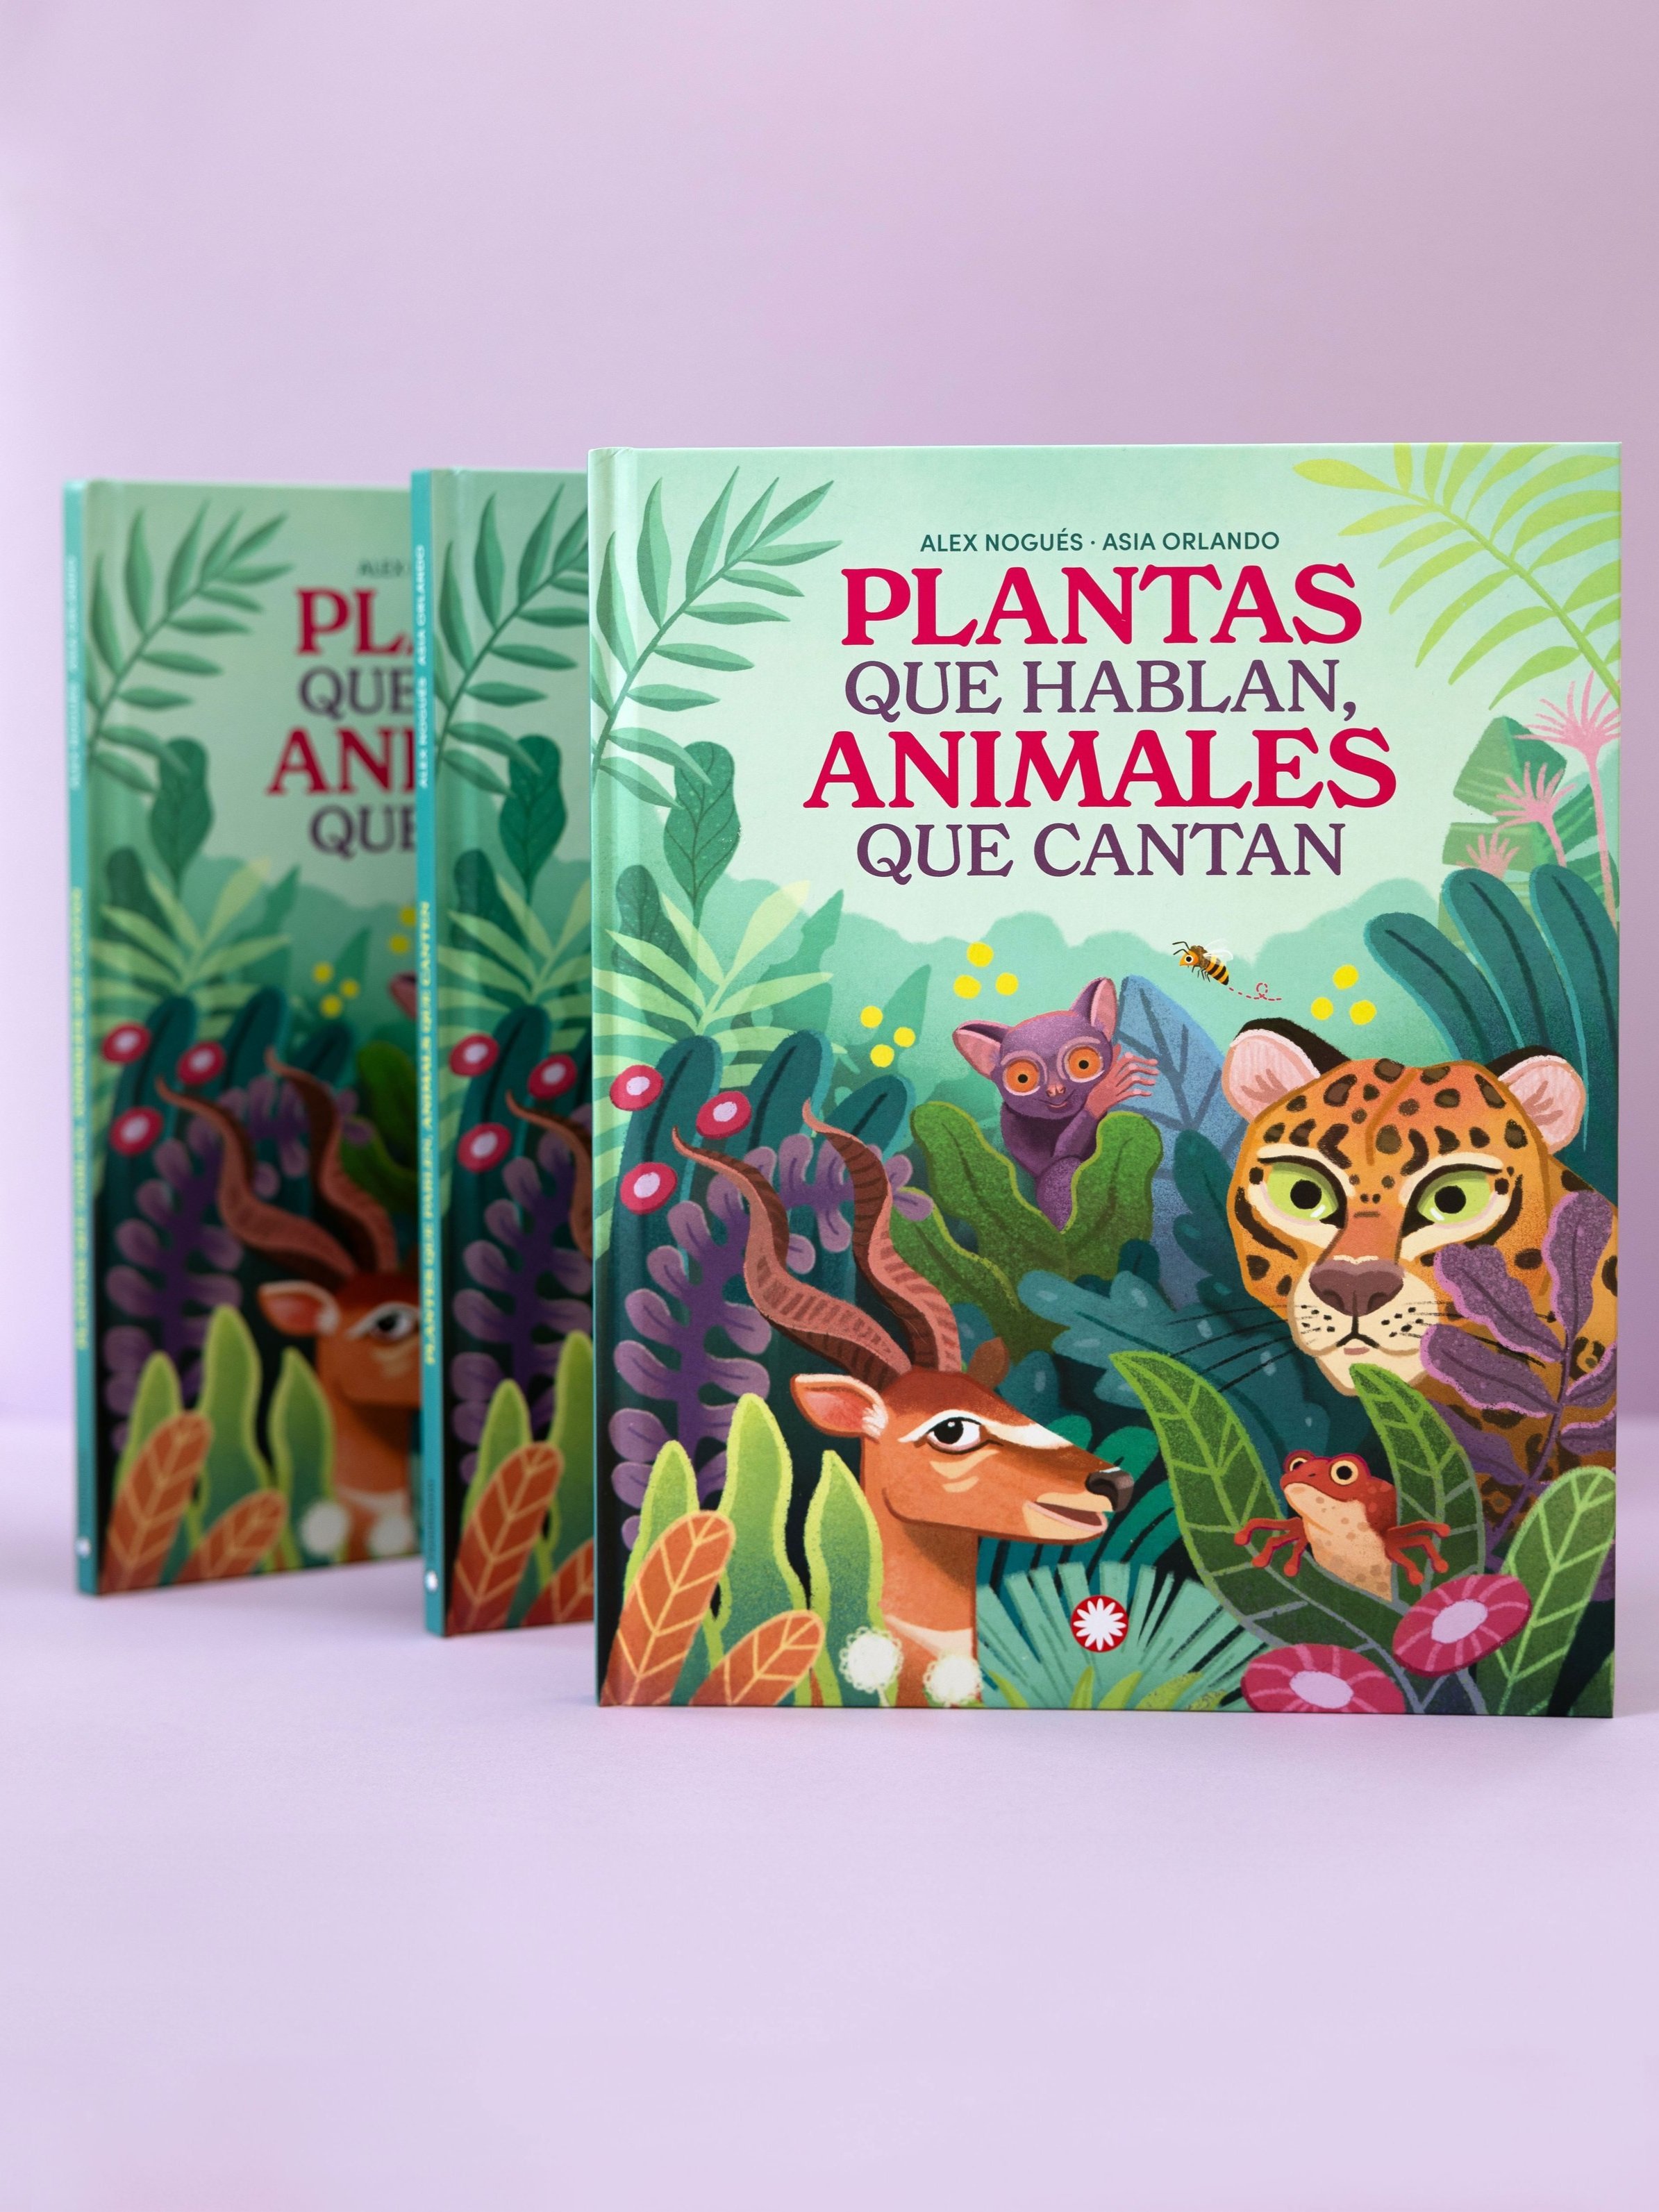 Asia_orlando_flamboyant_libro_infantil_ilustrado_naturaleza_animales-Book_illustrated_nature_animals.jpg